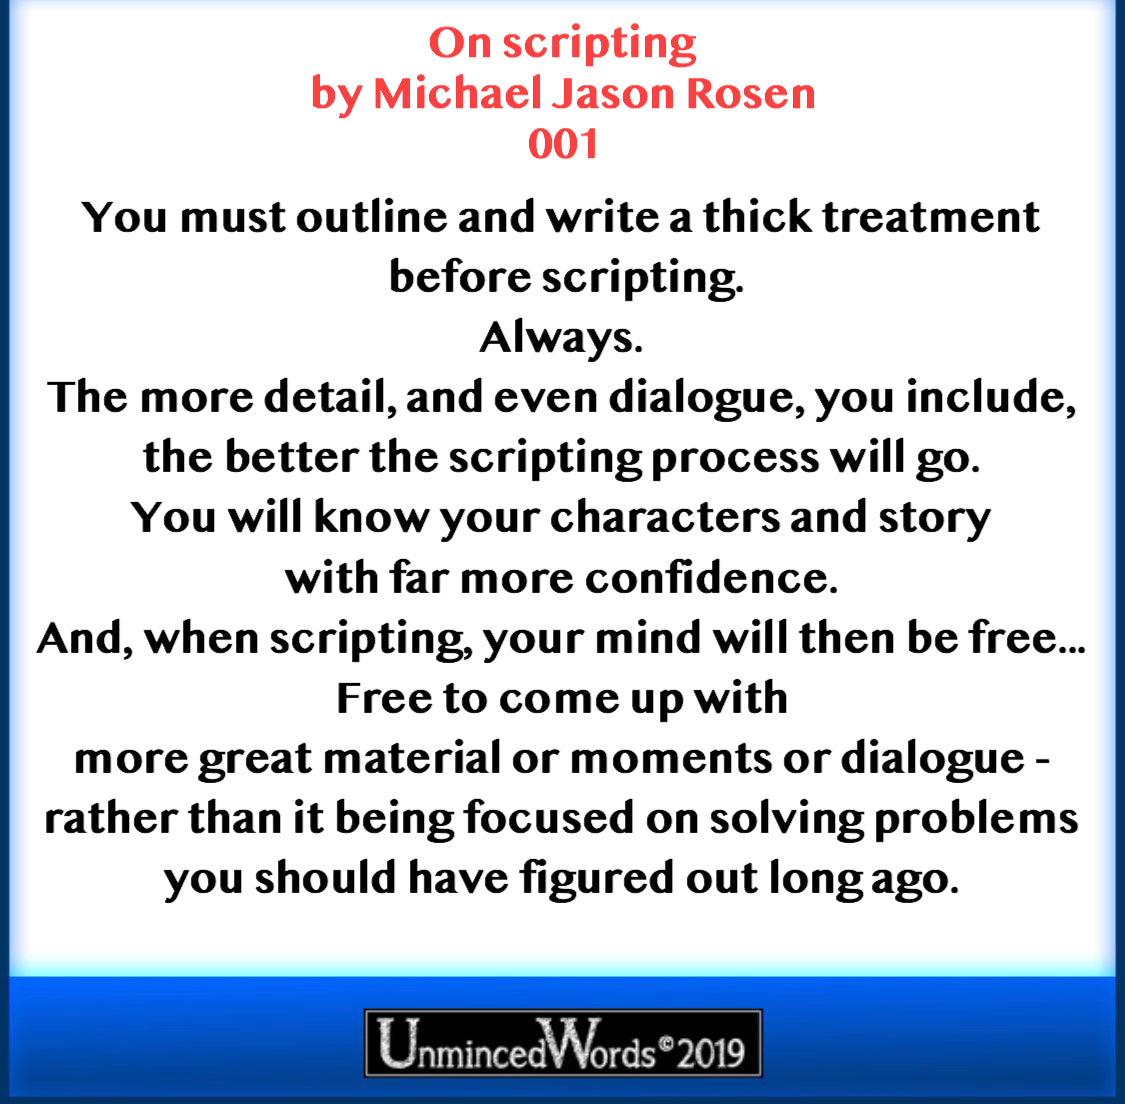 On scripting... by Michael Jason Rosen.